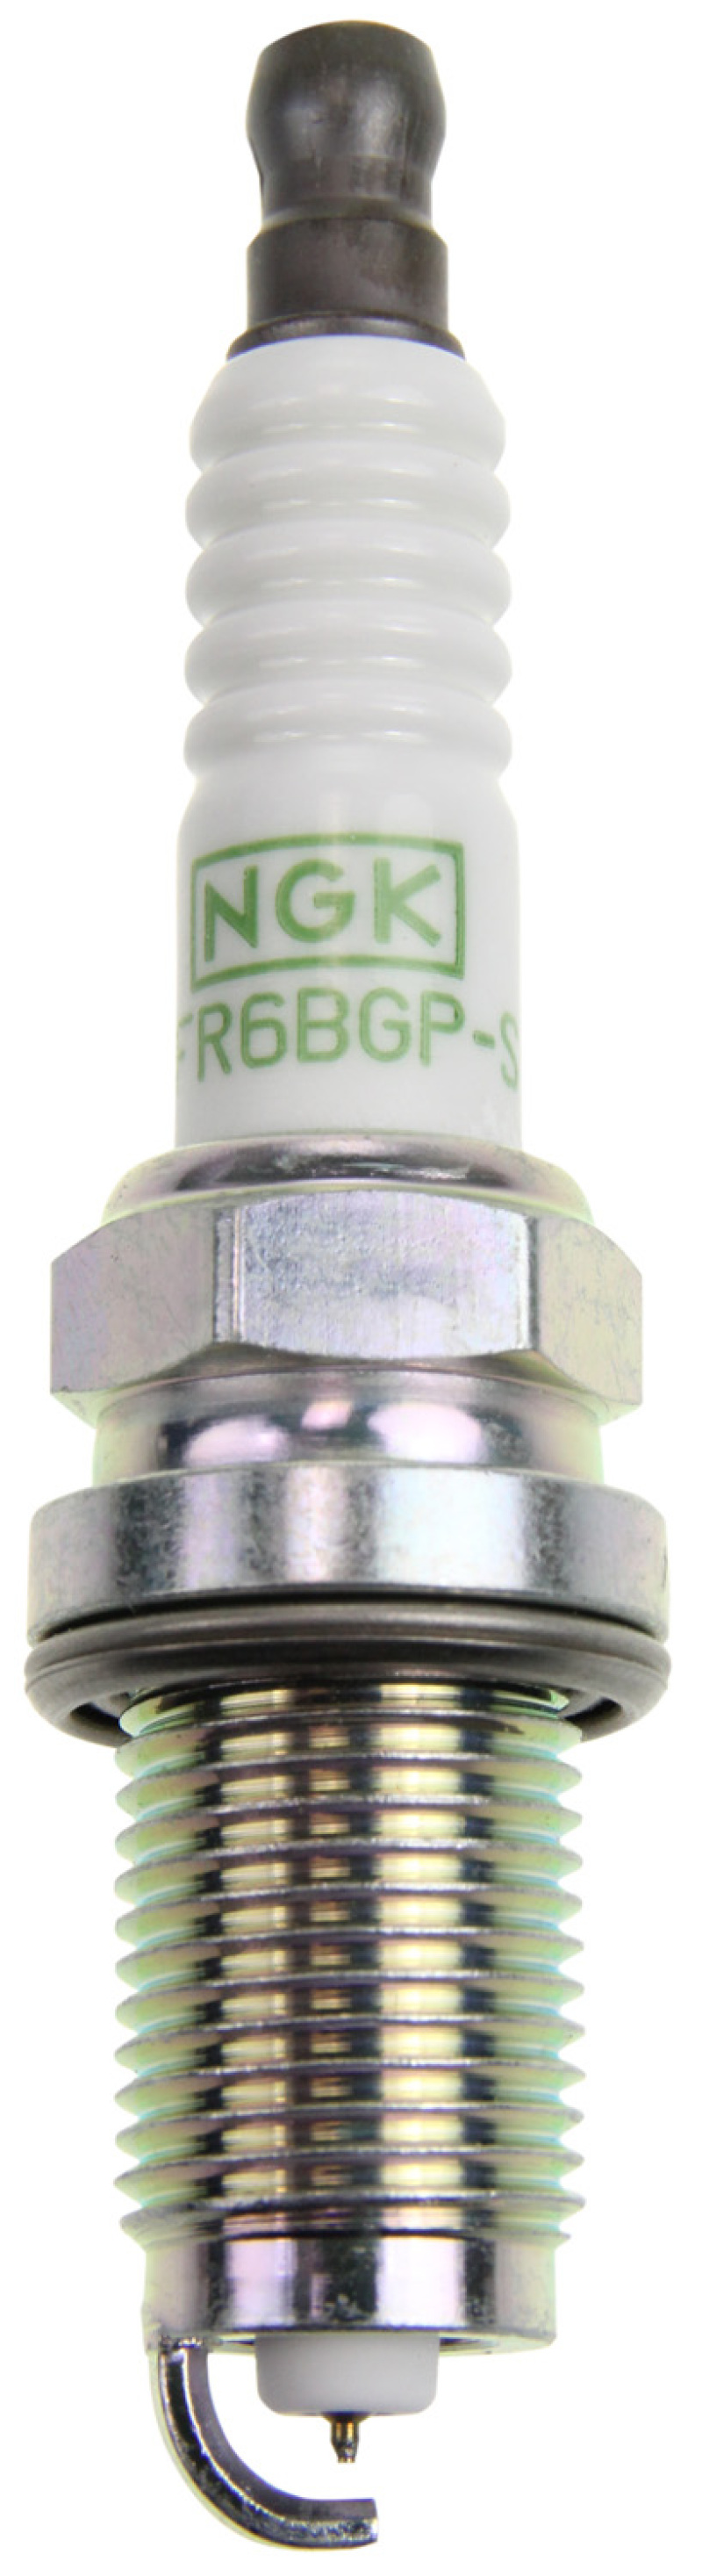 NGK G-Power Spark Plug Box of 4 (ZFR6BGP-S) - 92213